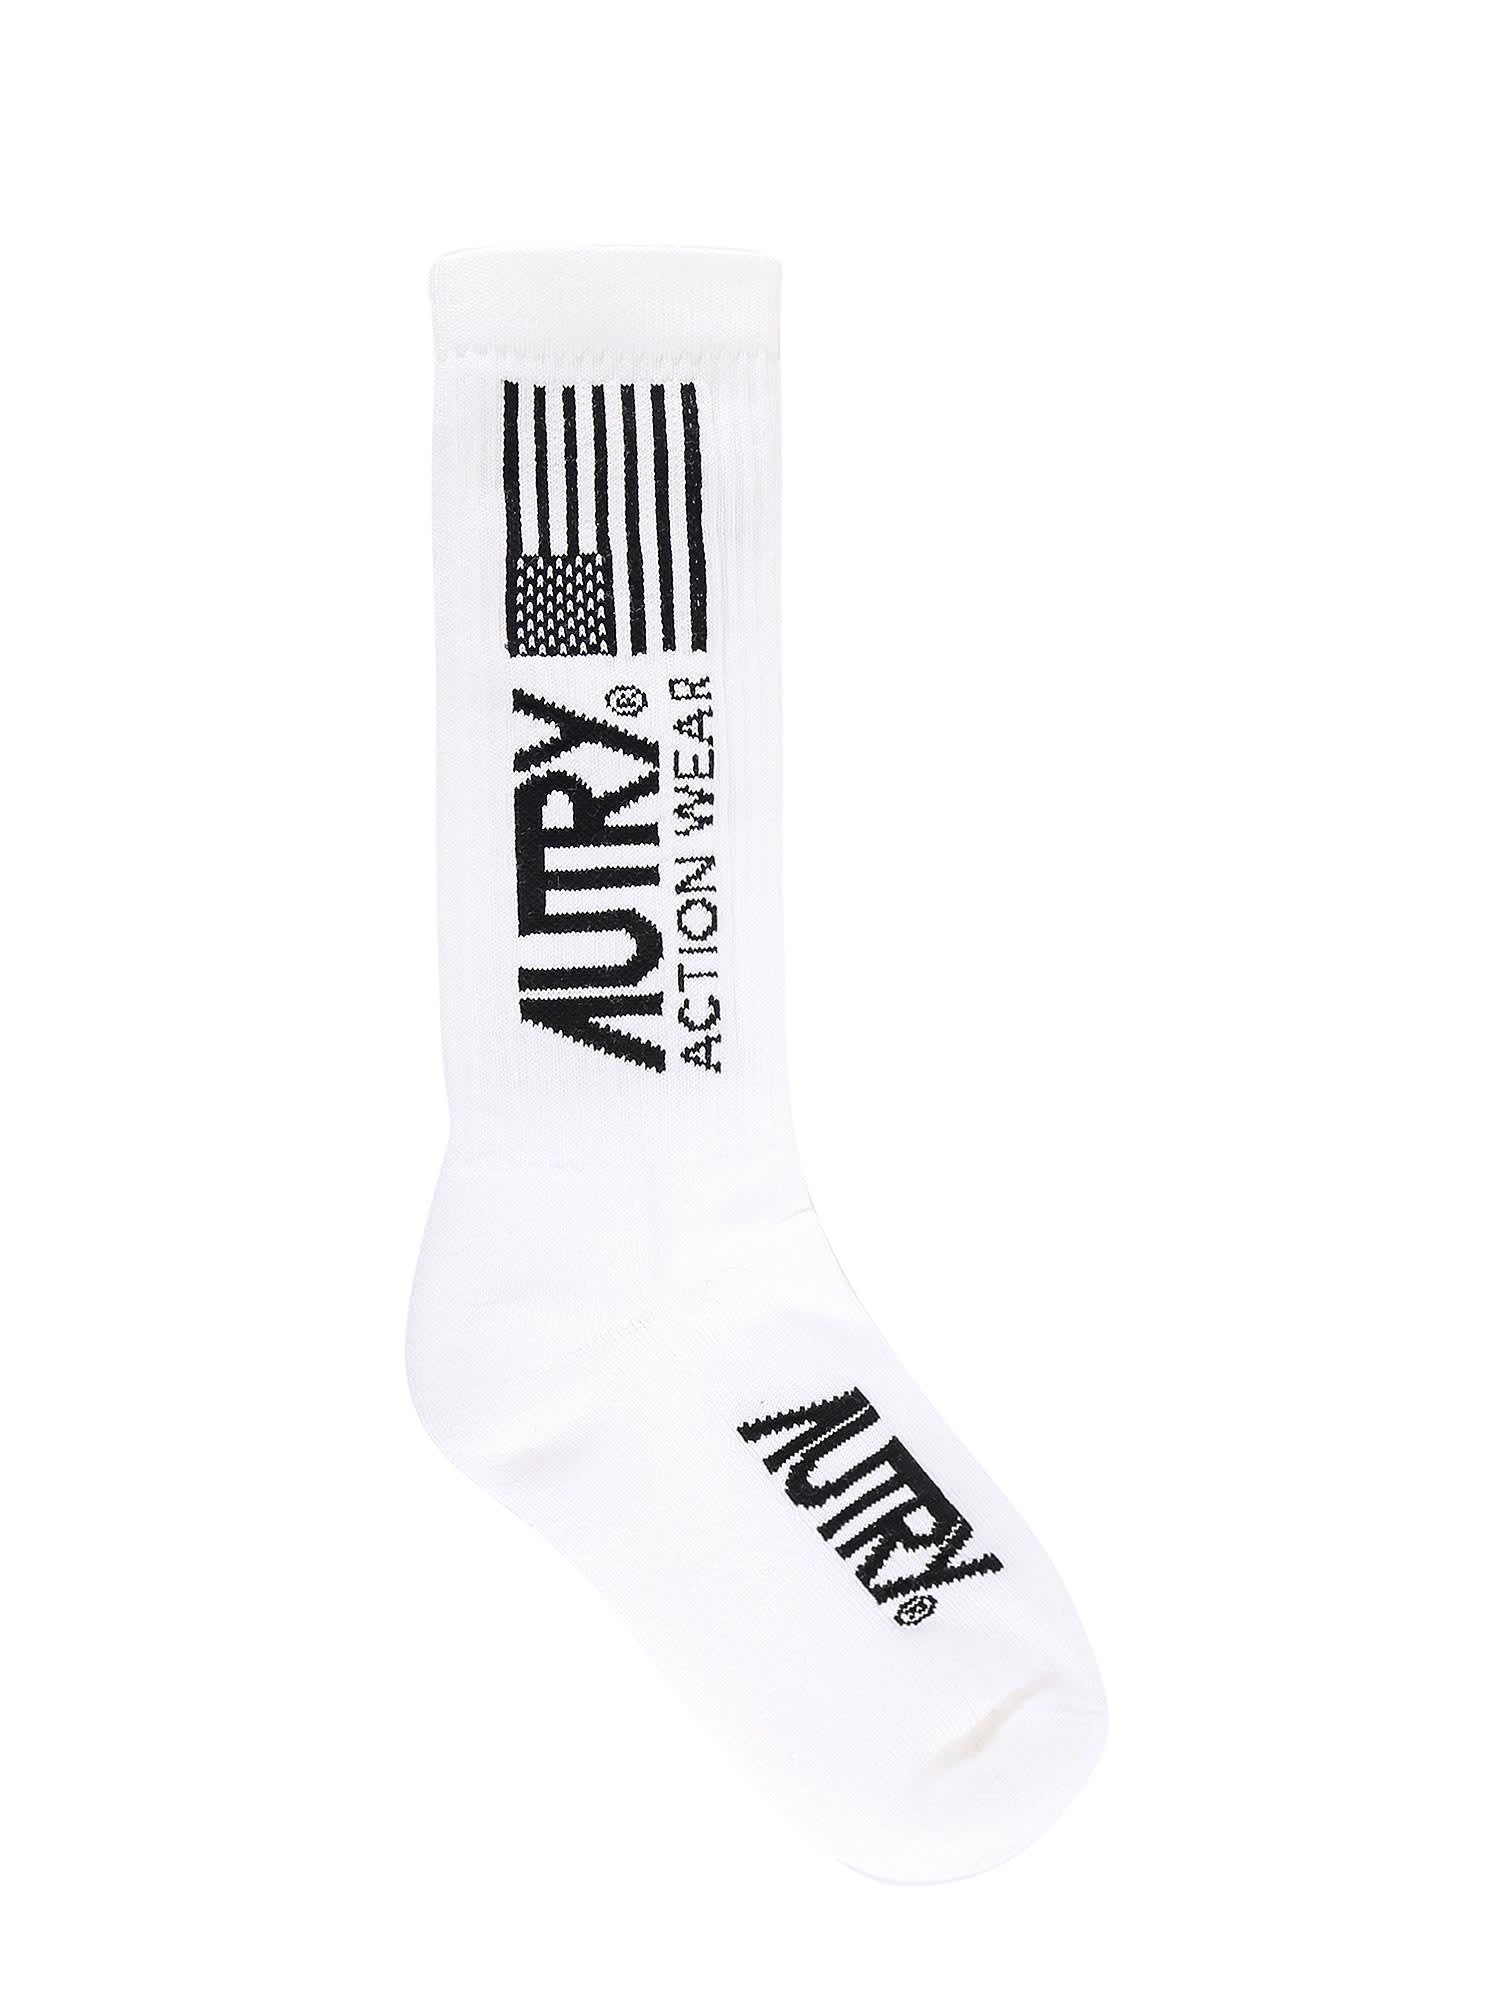 Autry Socks